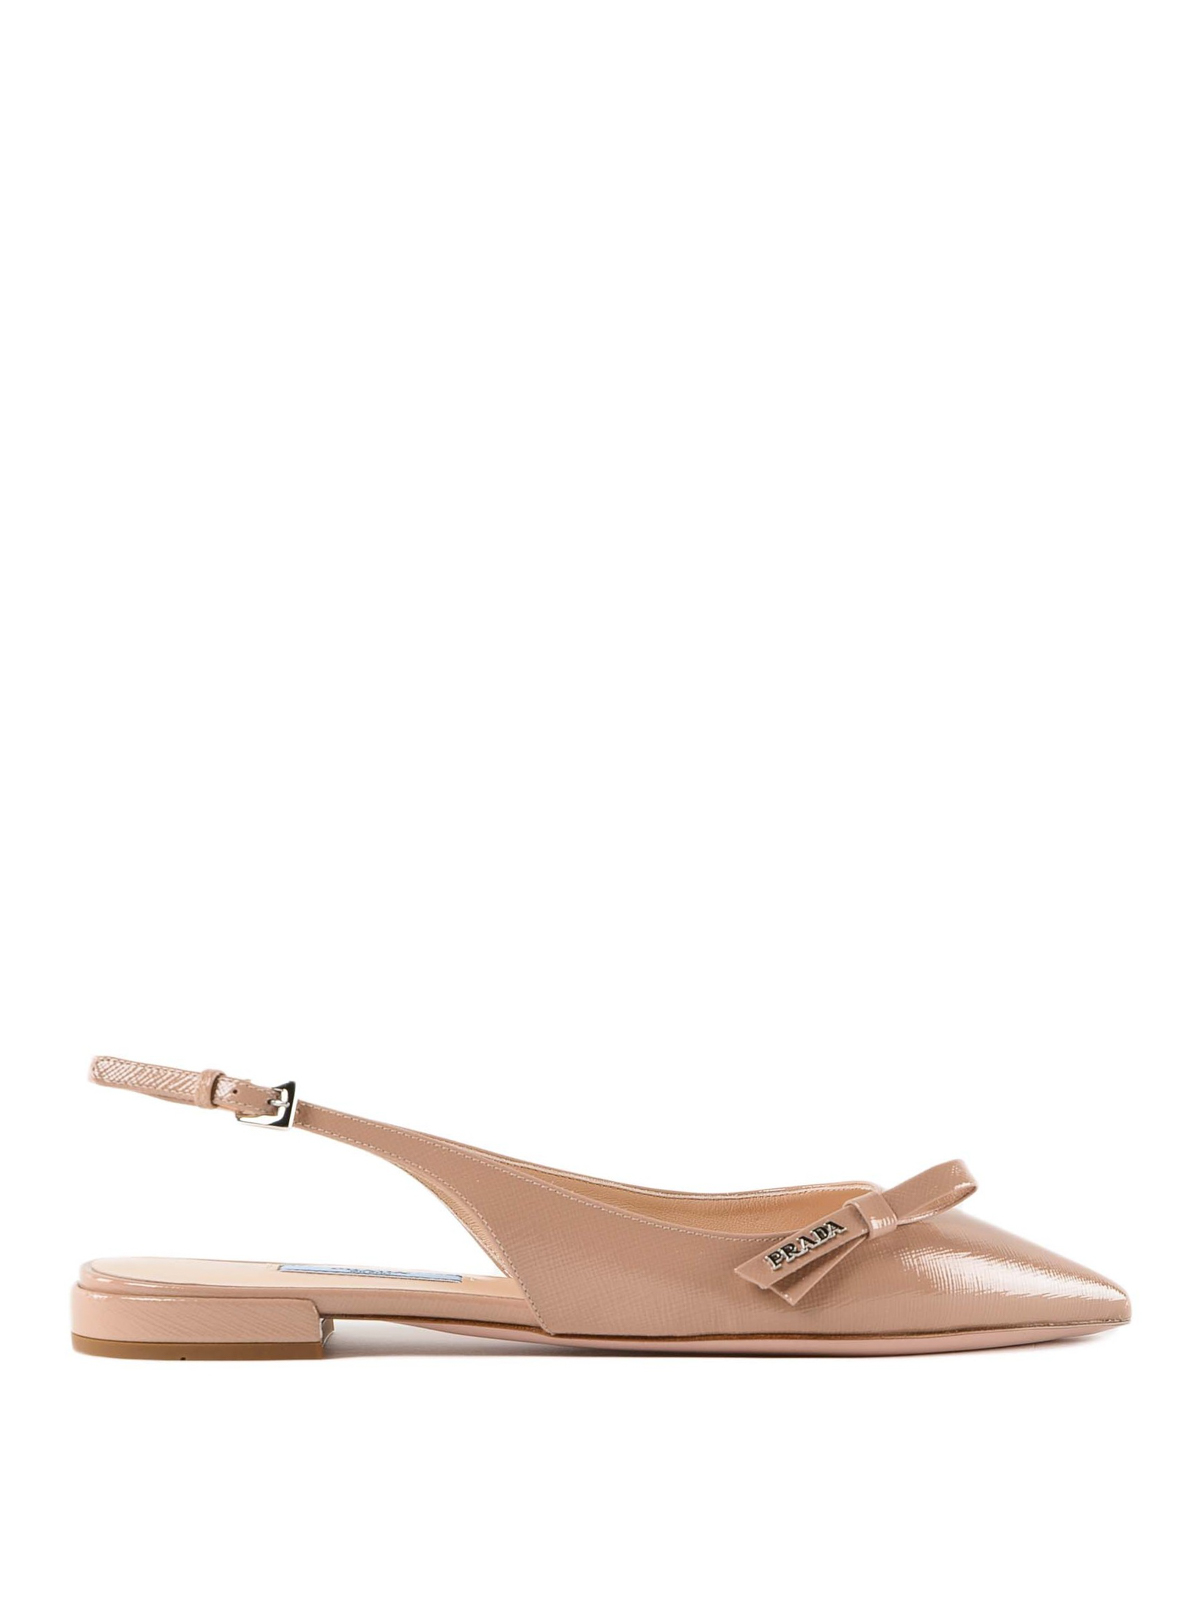 Sandals Prada - Pink patent leather slingback flat sandals - 1F211L3A9S770